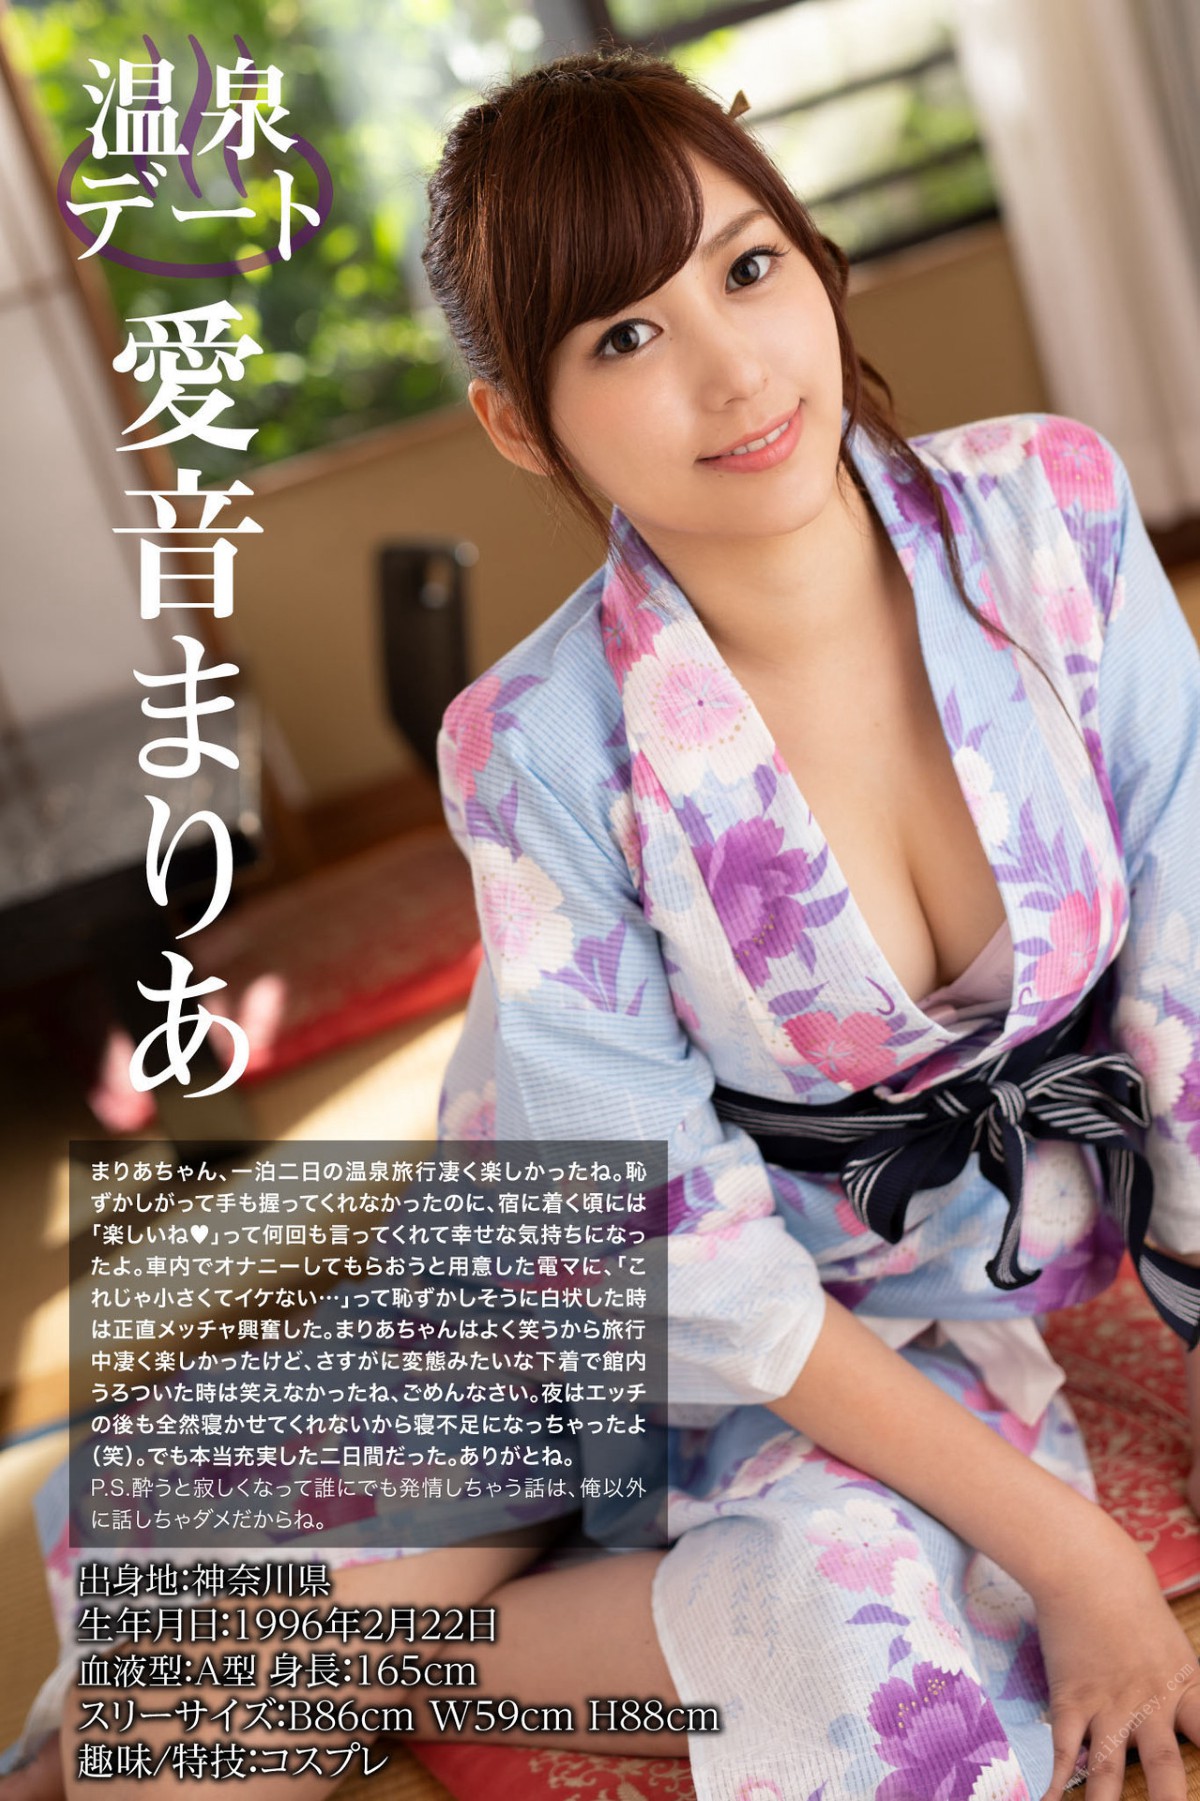 Photobook 2019 07 19 Asuna Kawai Maria Aine Nozomi Arimura 2 Days 1 Night Hot Spring Date 0020 4797044119.jpg